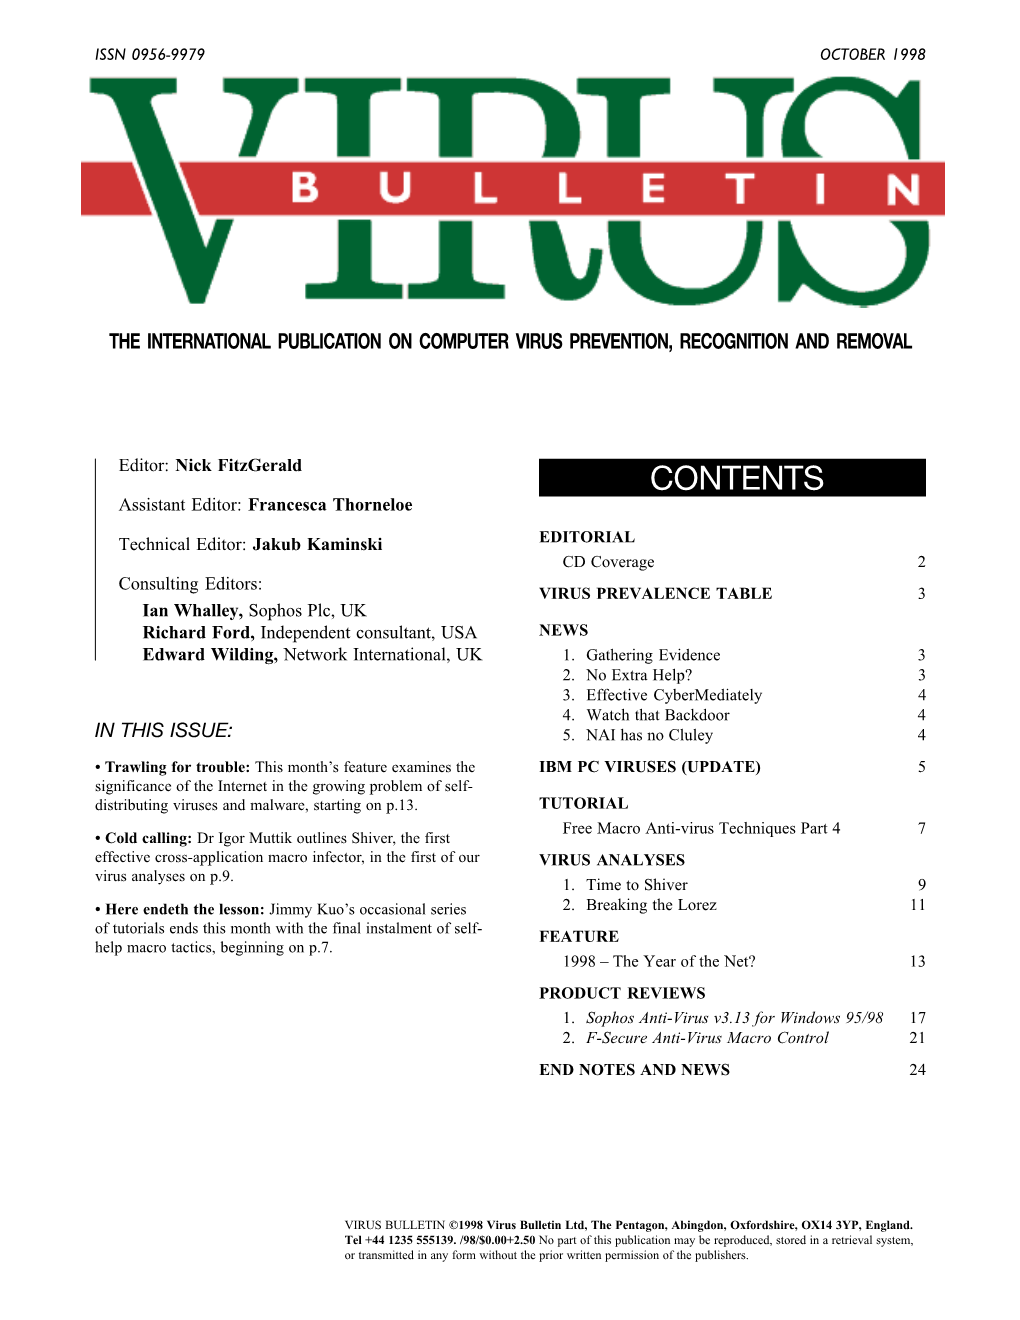 Virus Bulletin, October 1998